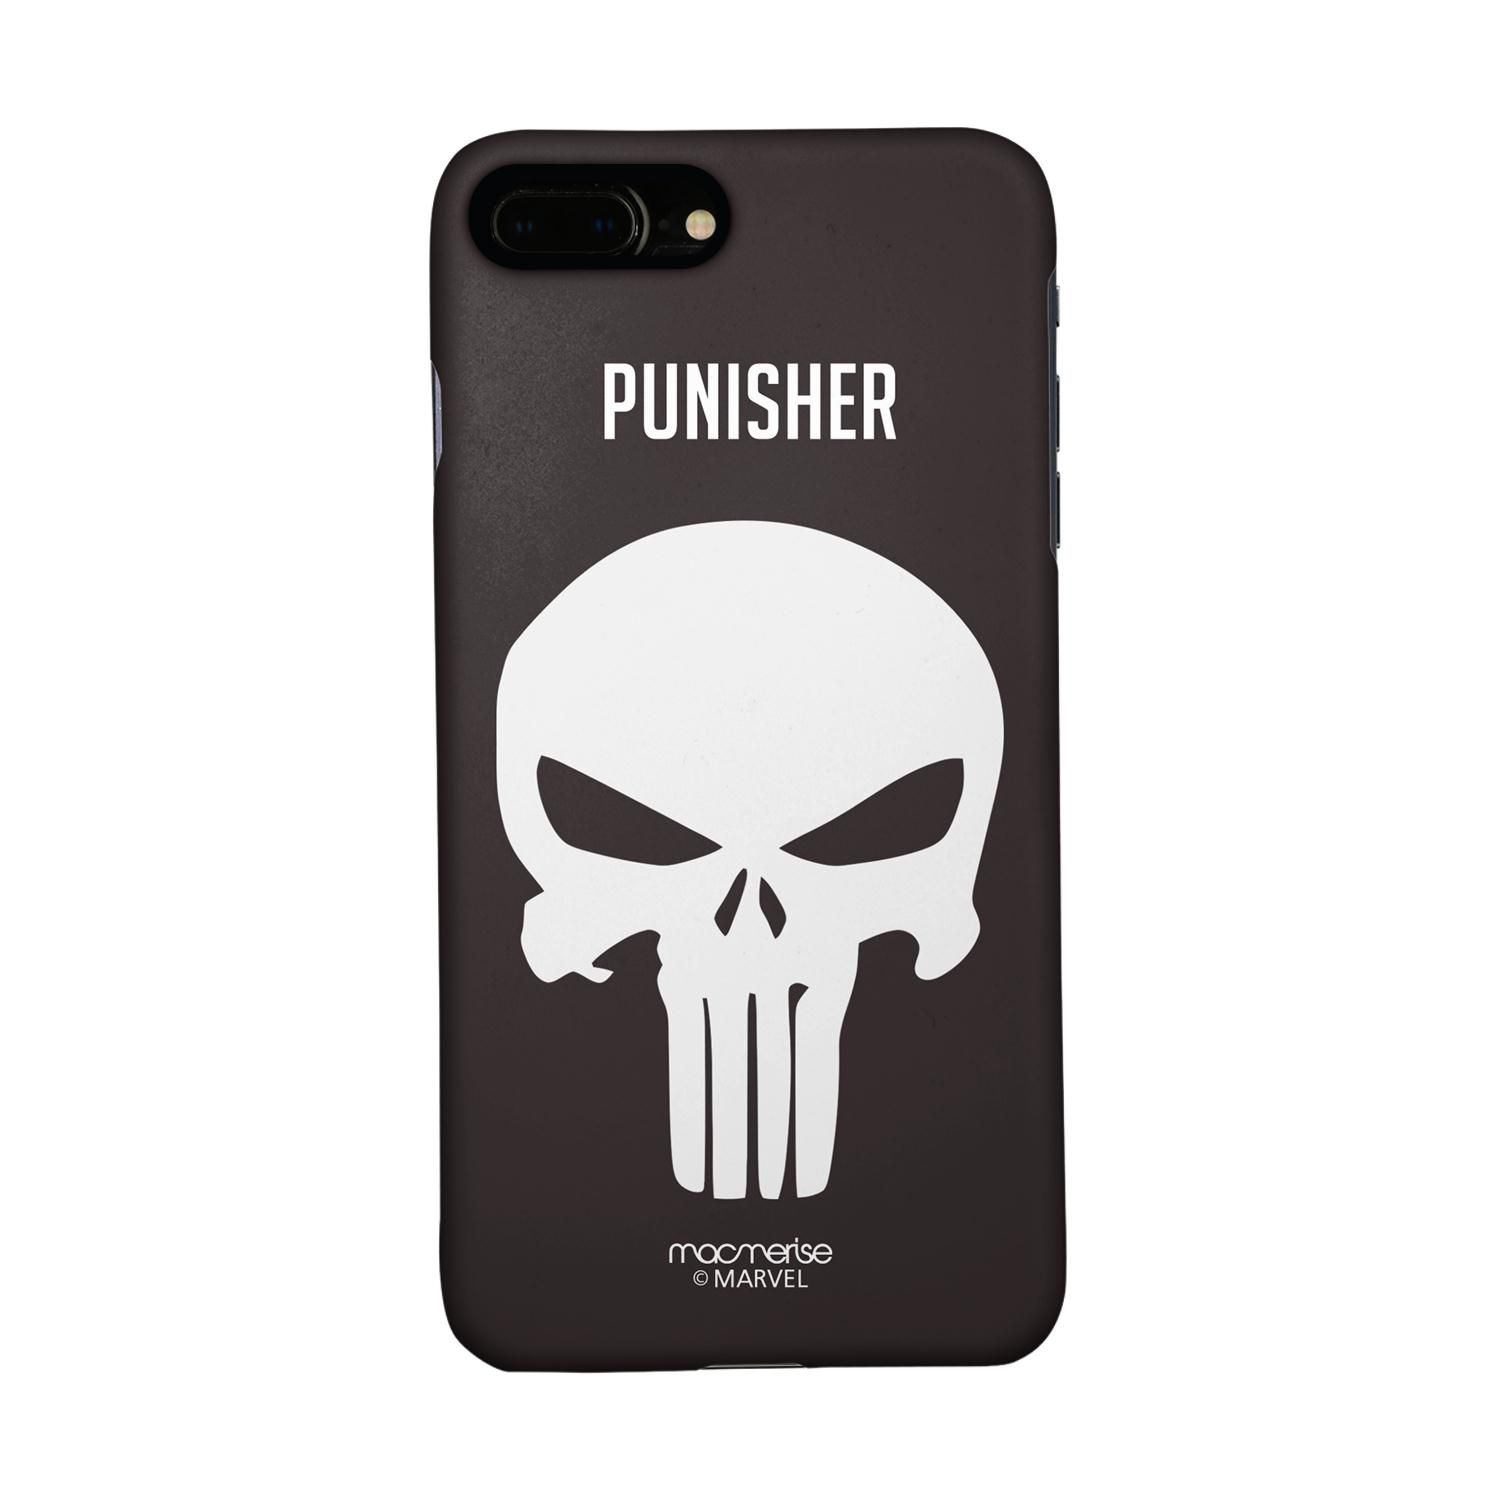 Buy Punisher Symbol - Sleek Phone Case for iPhone 7 Plus Online